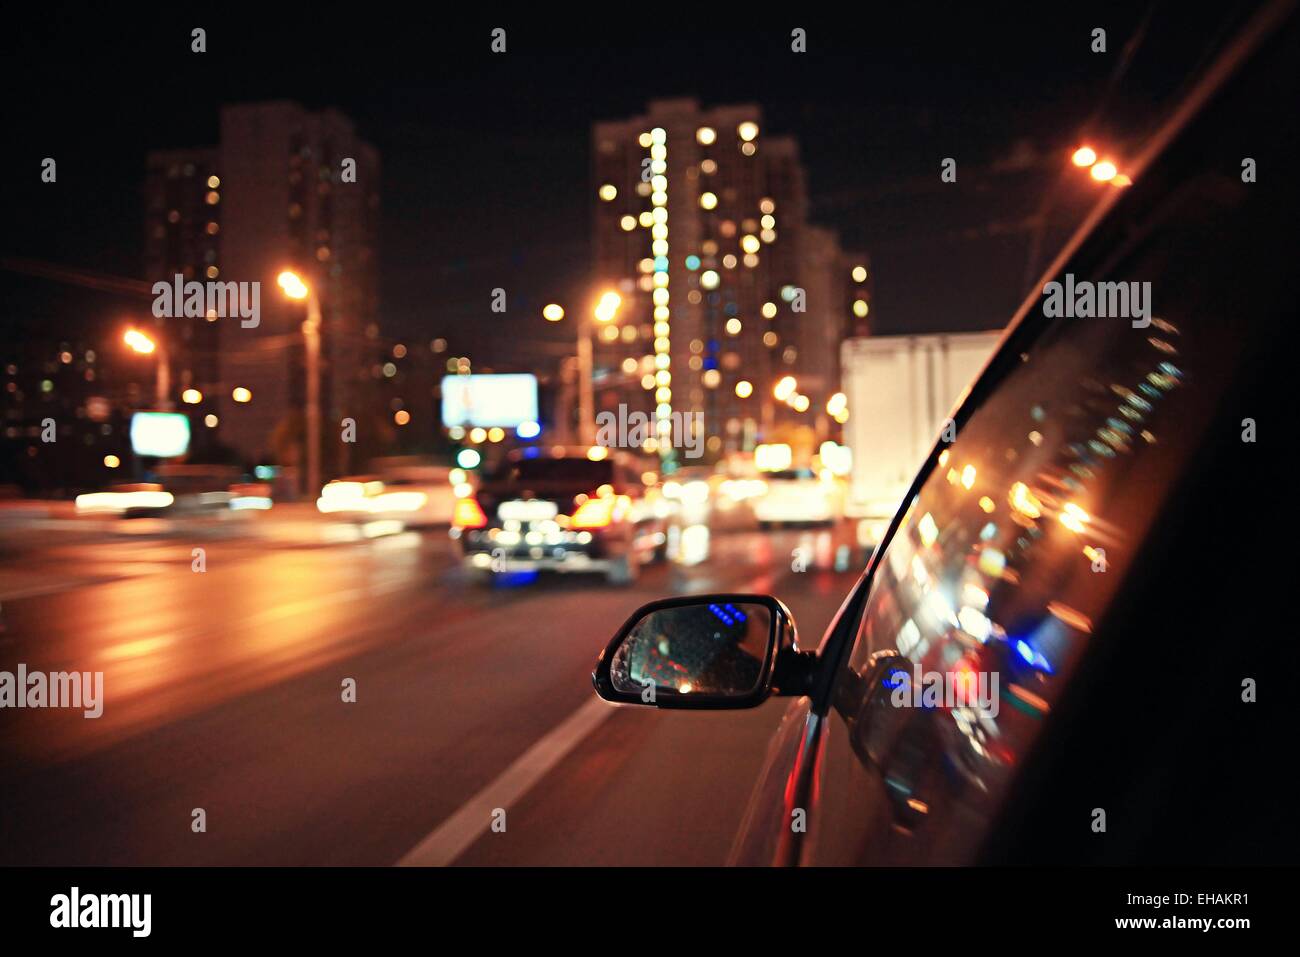 background blur night traffic jams traffic speed Stock Photo